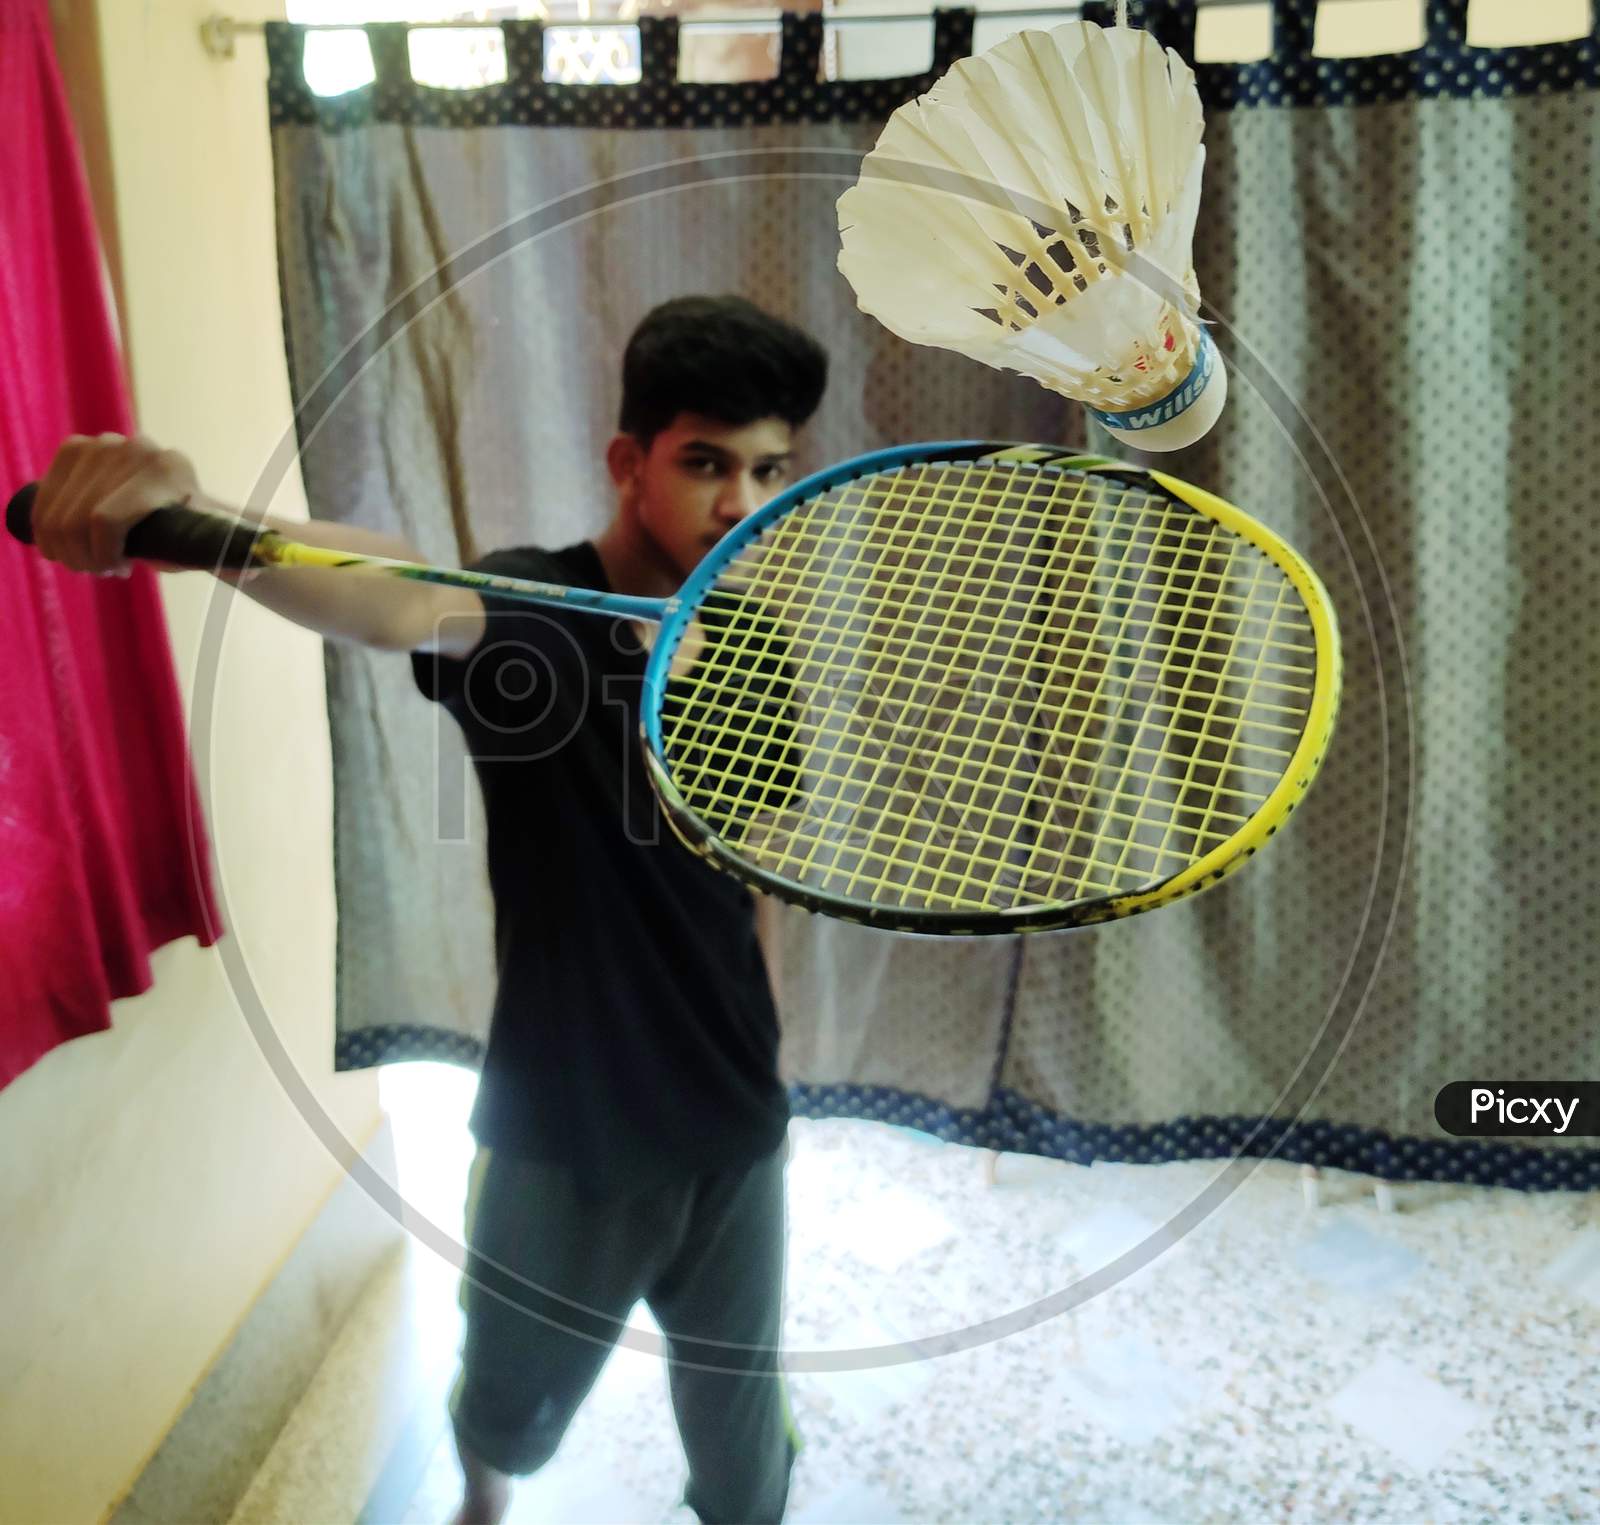 A boy playing badminton